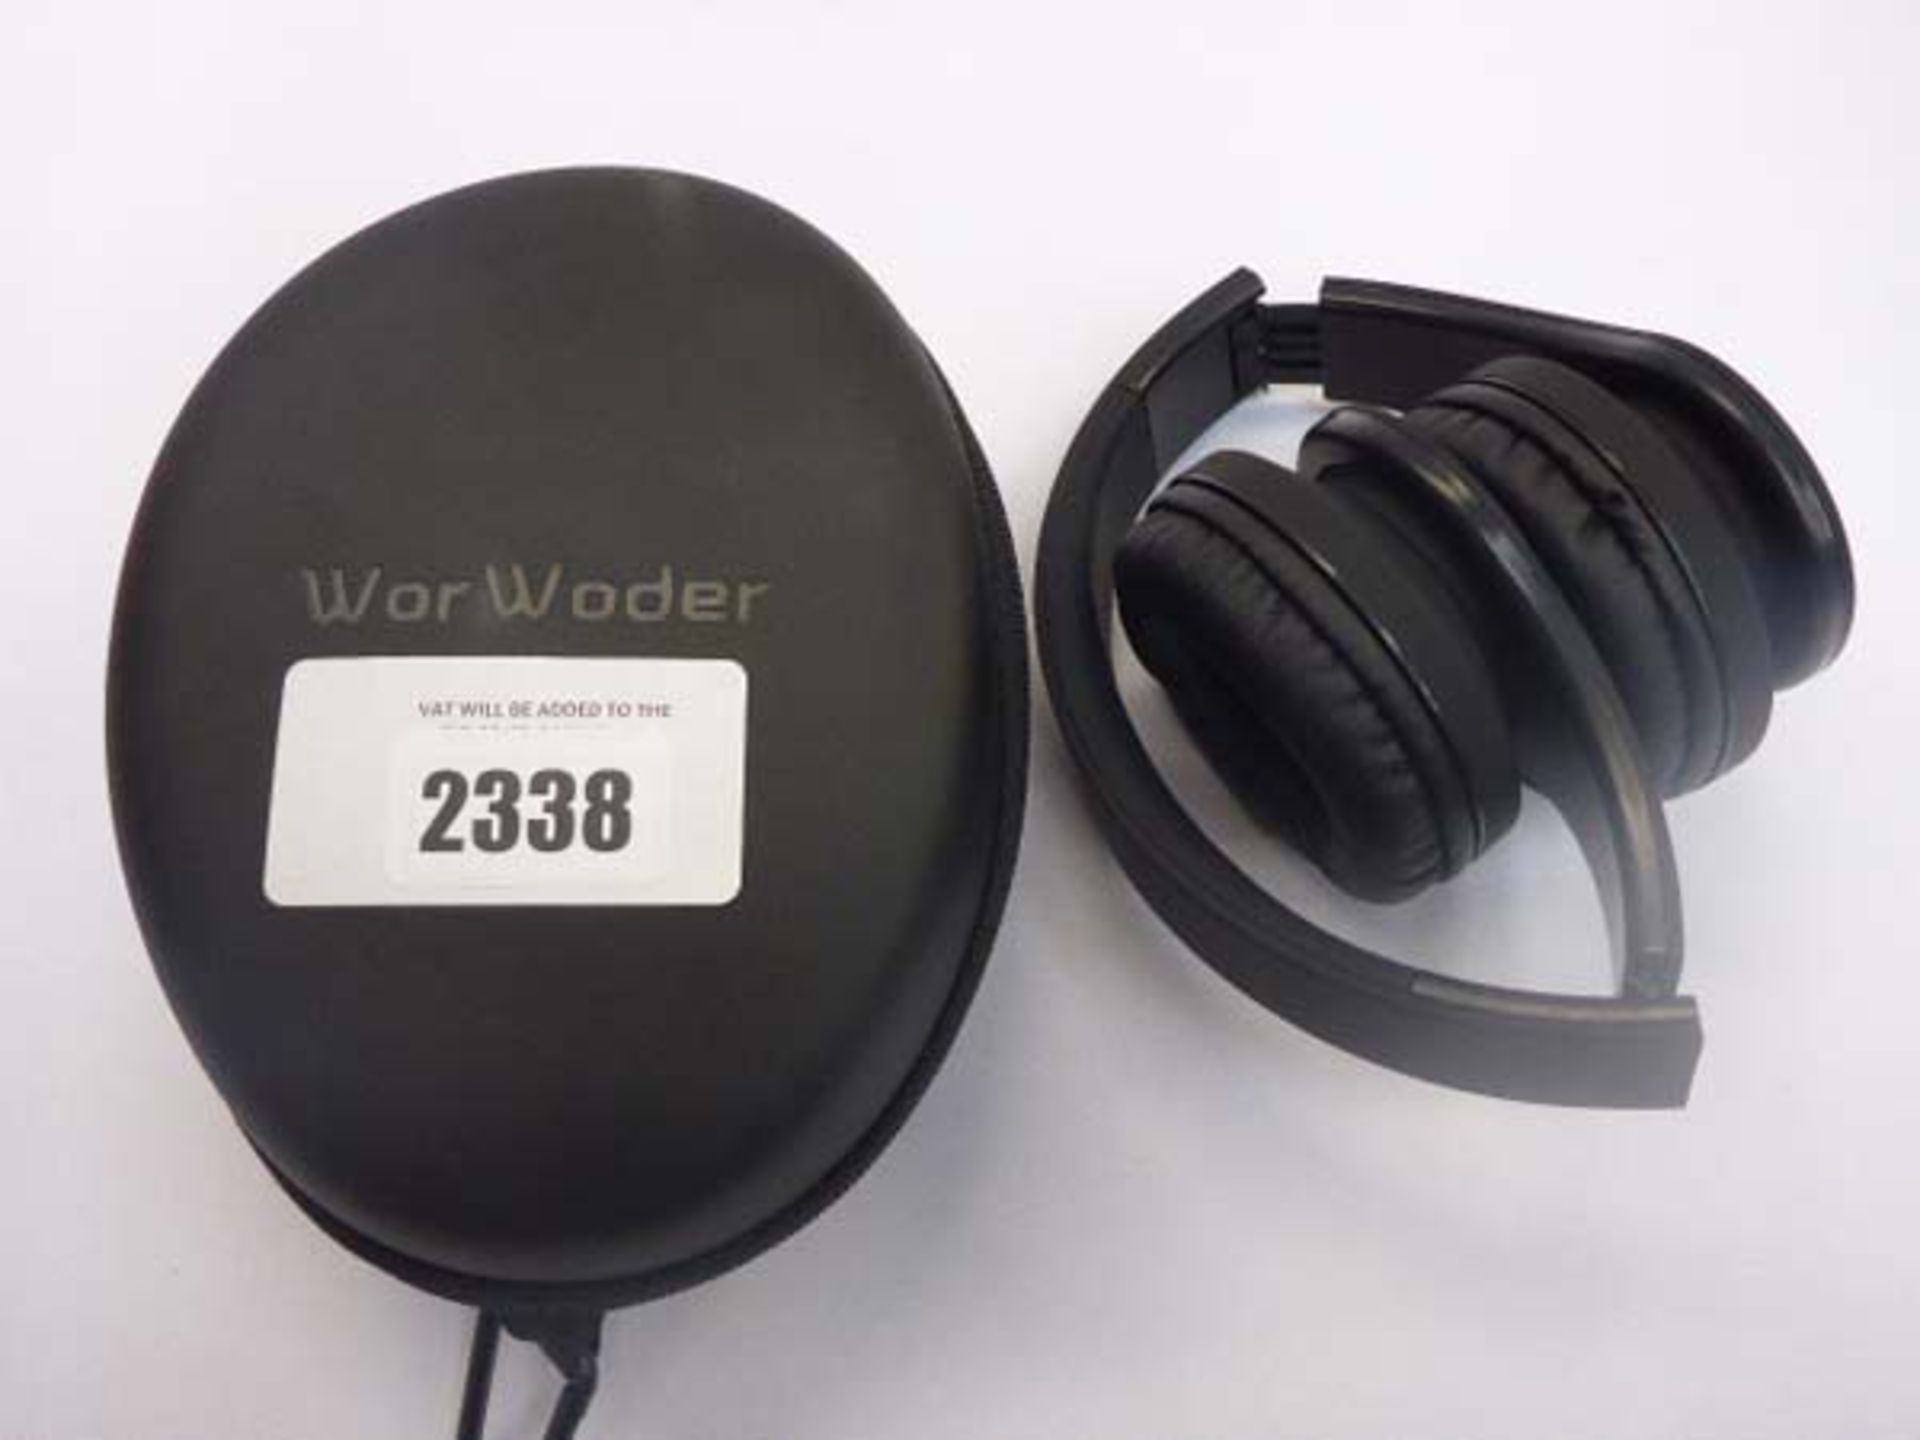 Wor Woder Headphones in soft carry case